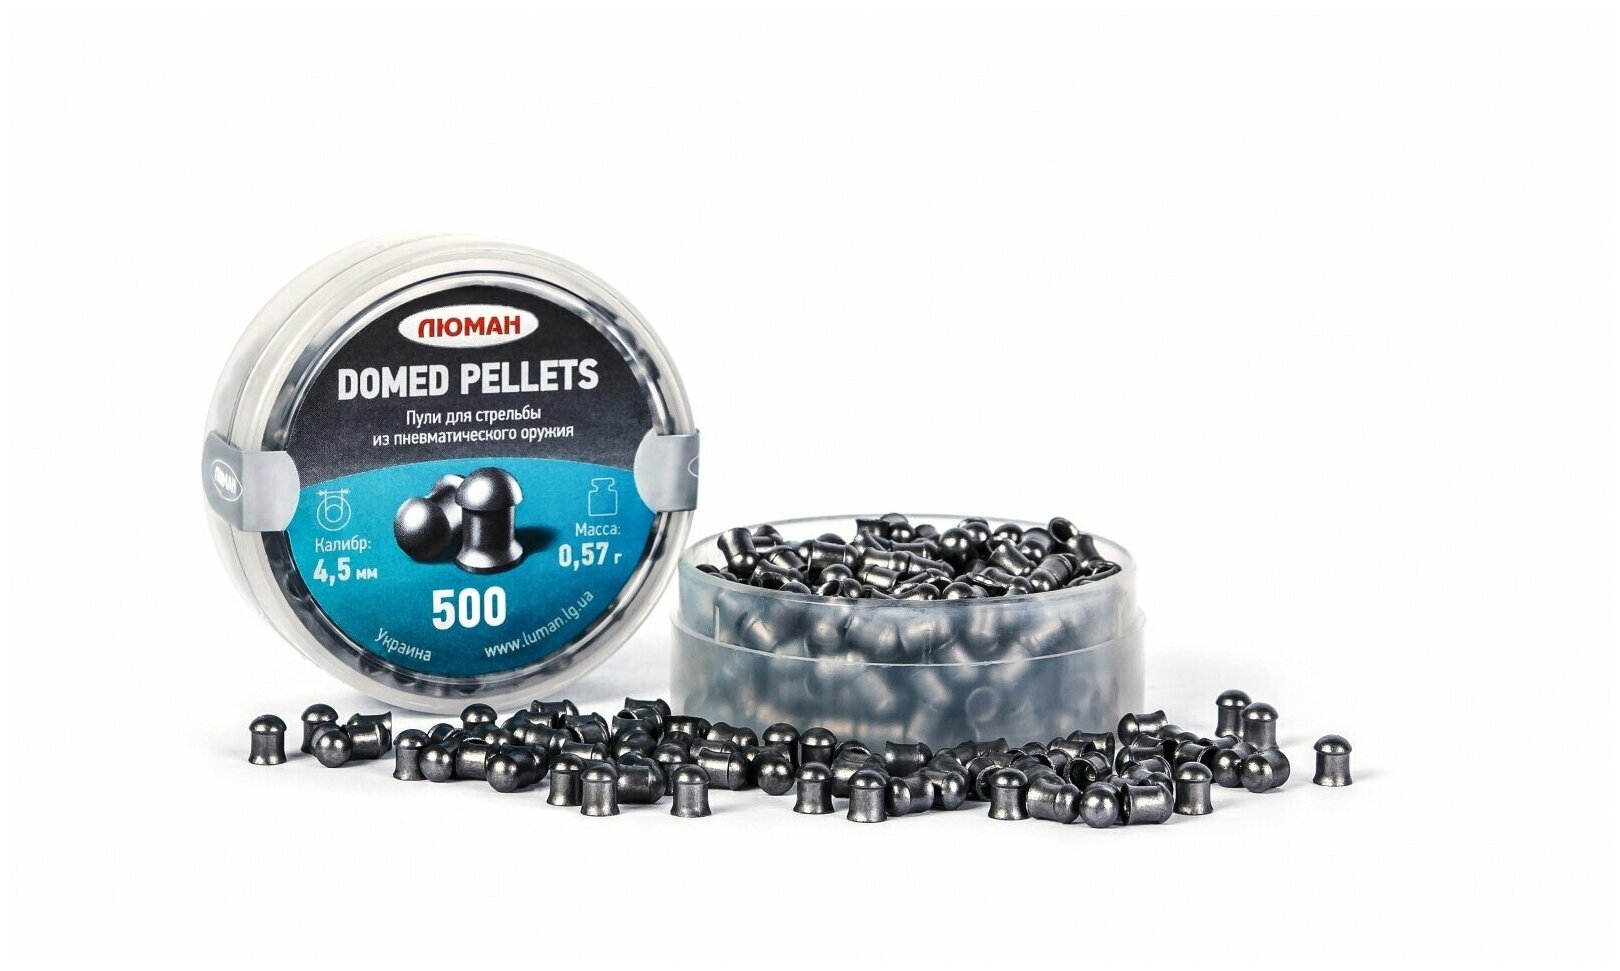 Пульки Люман Domed pellets, калибр 4,5 мм, вес 0,57 г, 500 шт